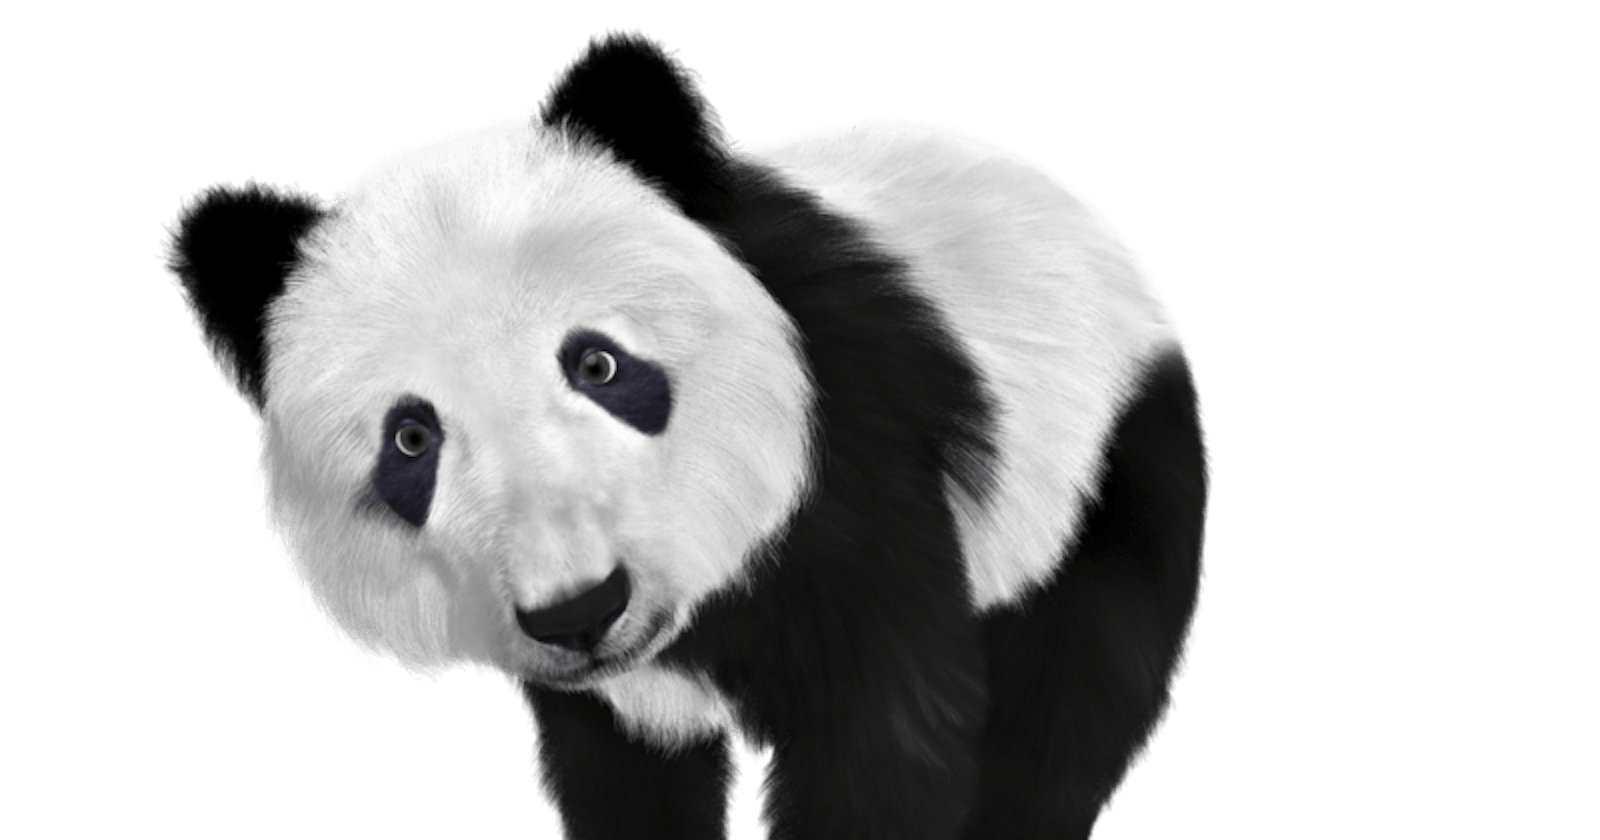 The easier way to handling large files in pandas